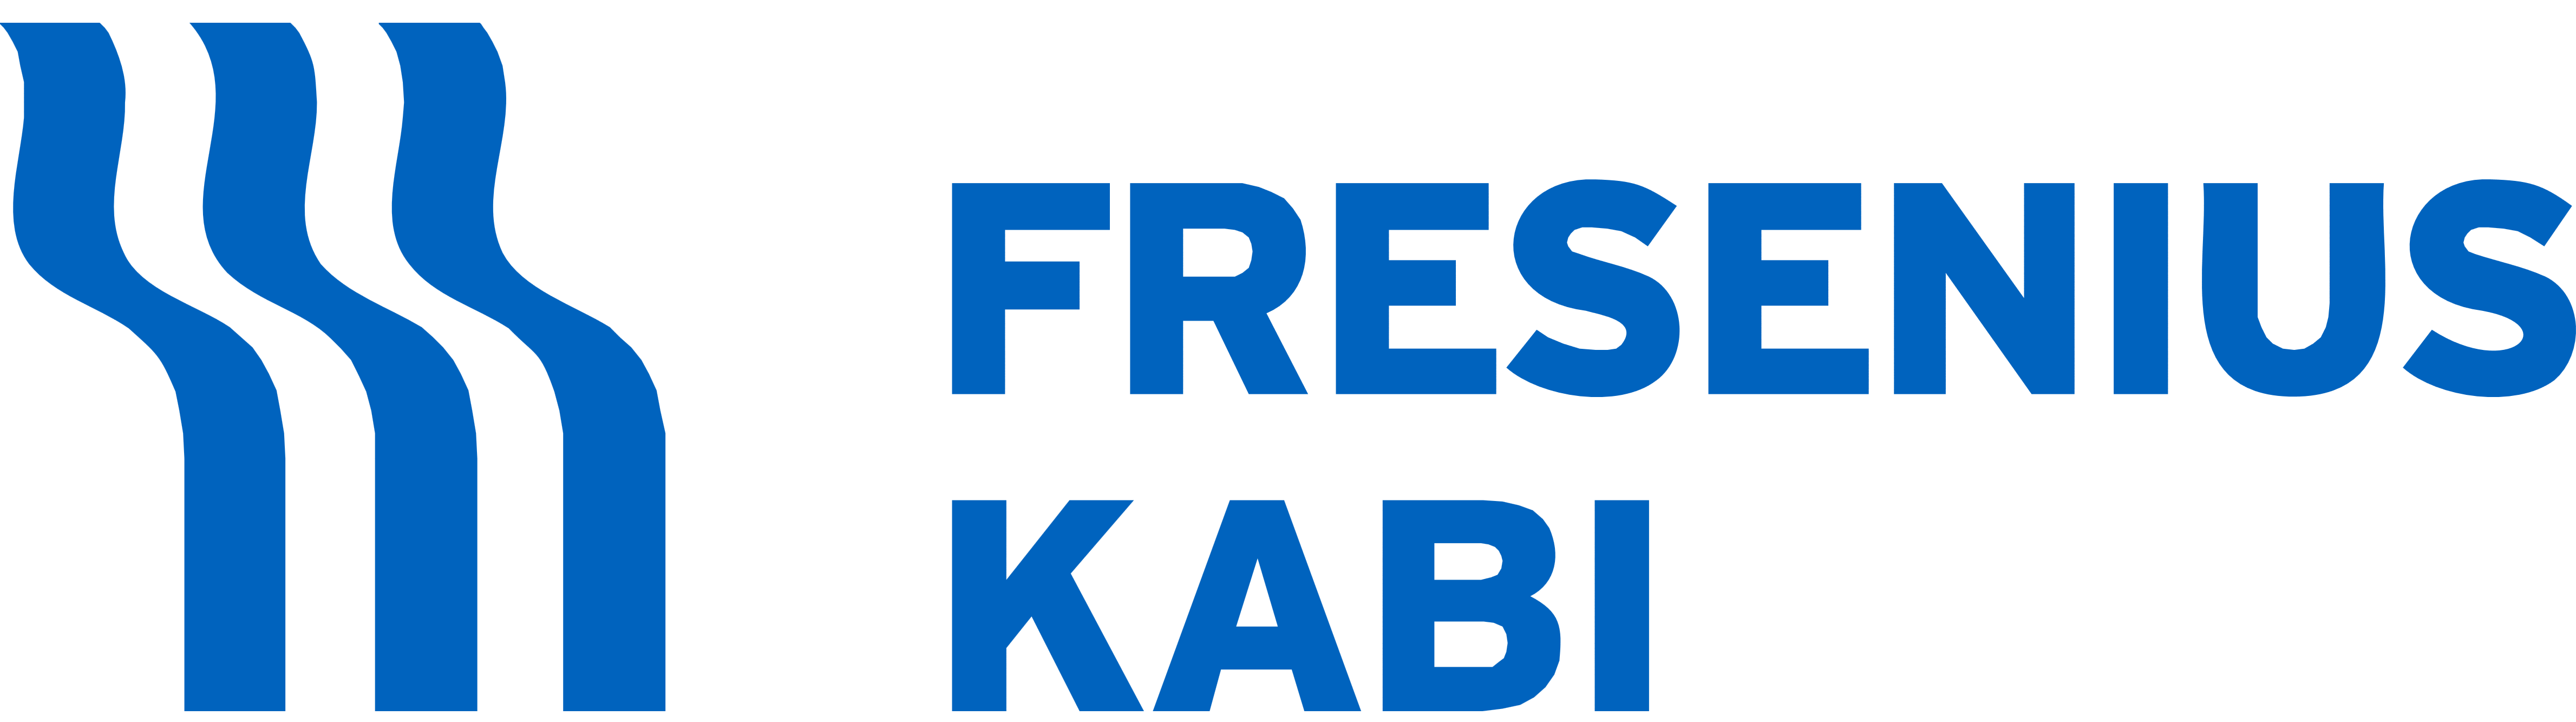 Fresenius Medical Care Logo V